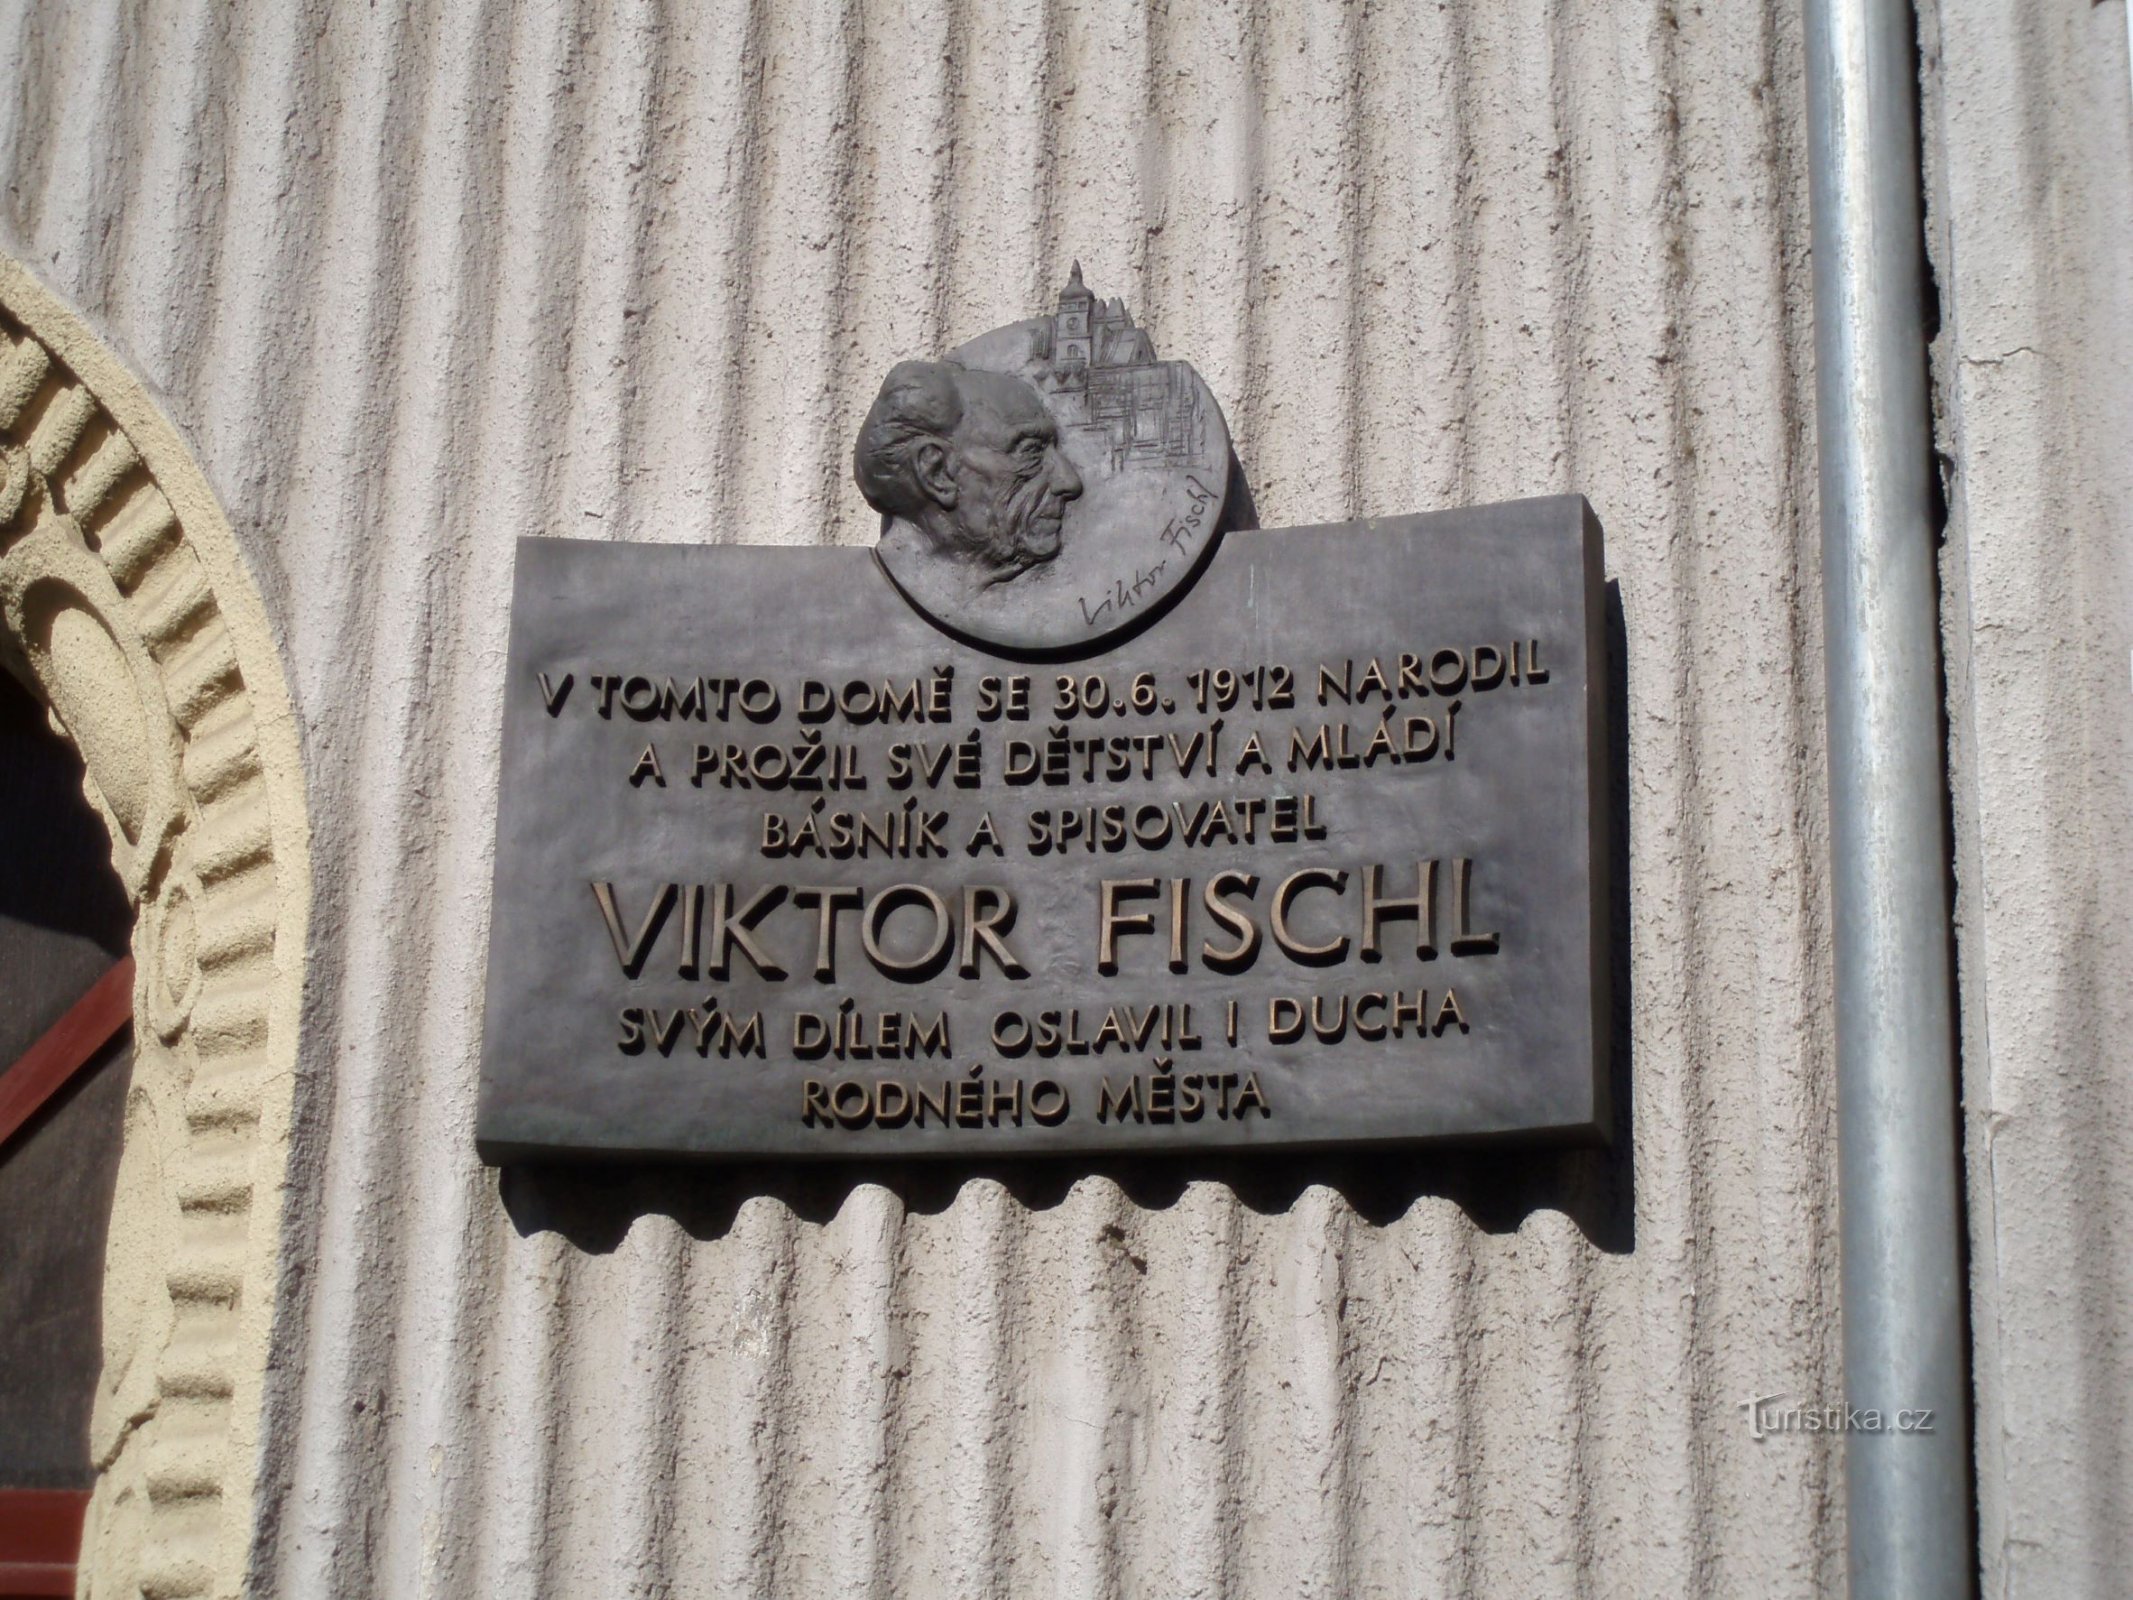 Spominska plošča na rojstni hiši Viktorja Fischla (Hradec Králové, 20.4.2011. april XNUMX)